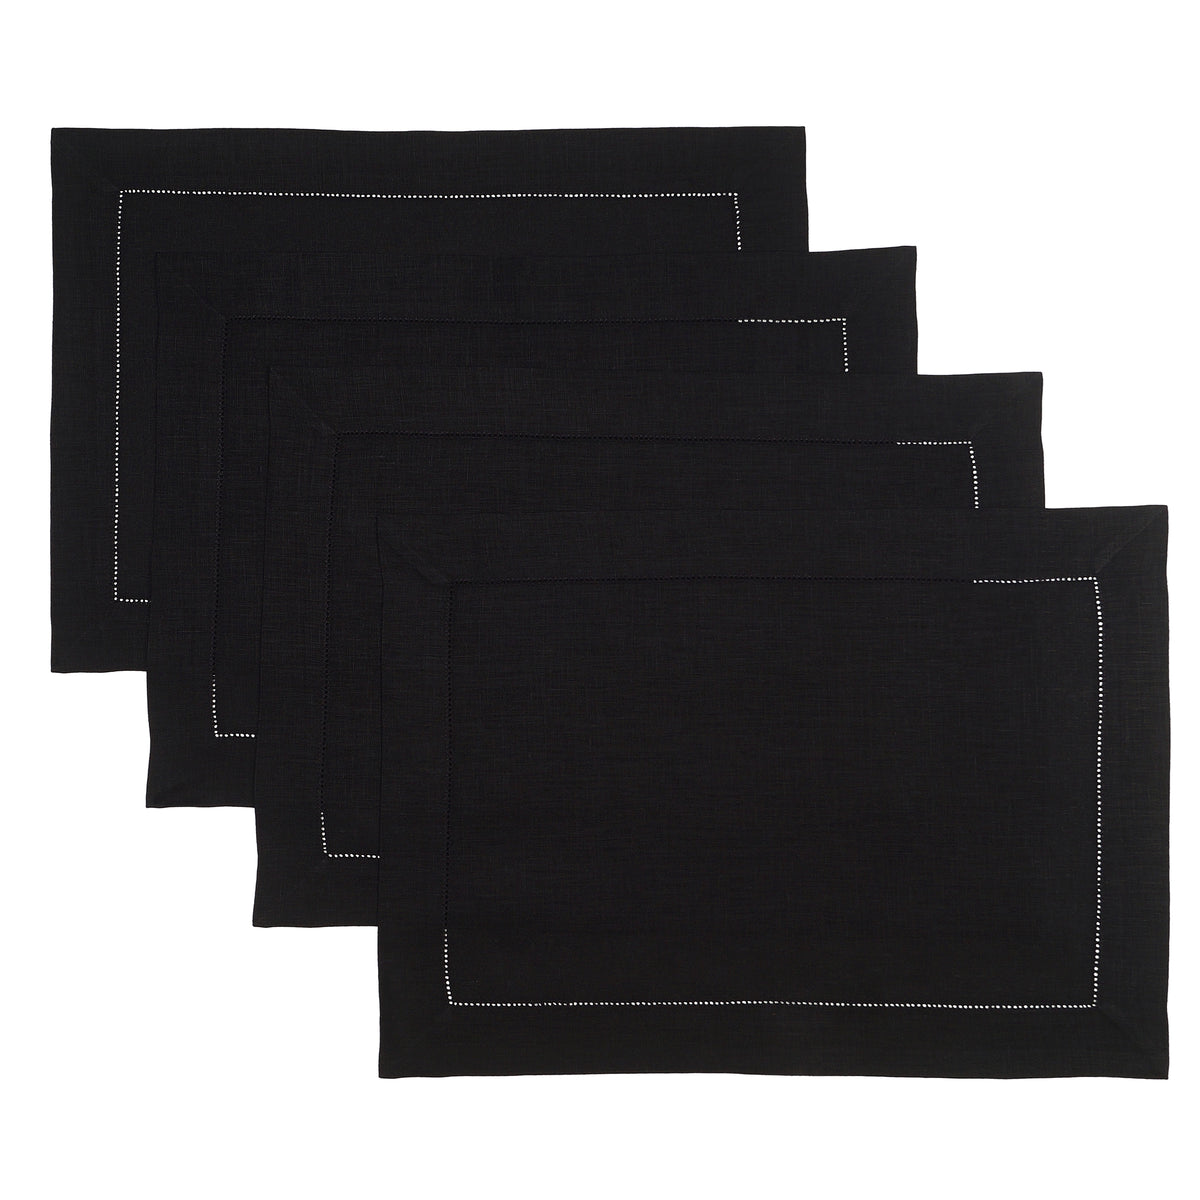 Black Linen Placemats 14 x 19 Inch Set of 4 - Hemstitch